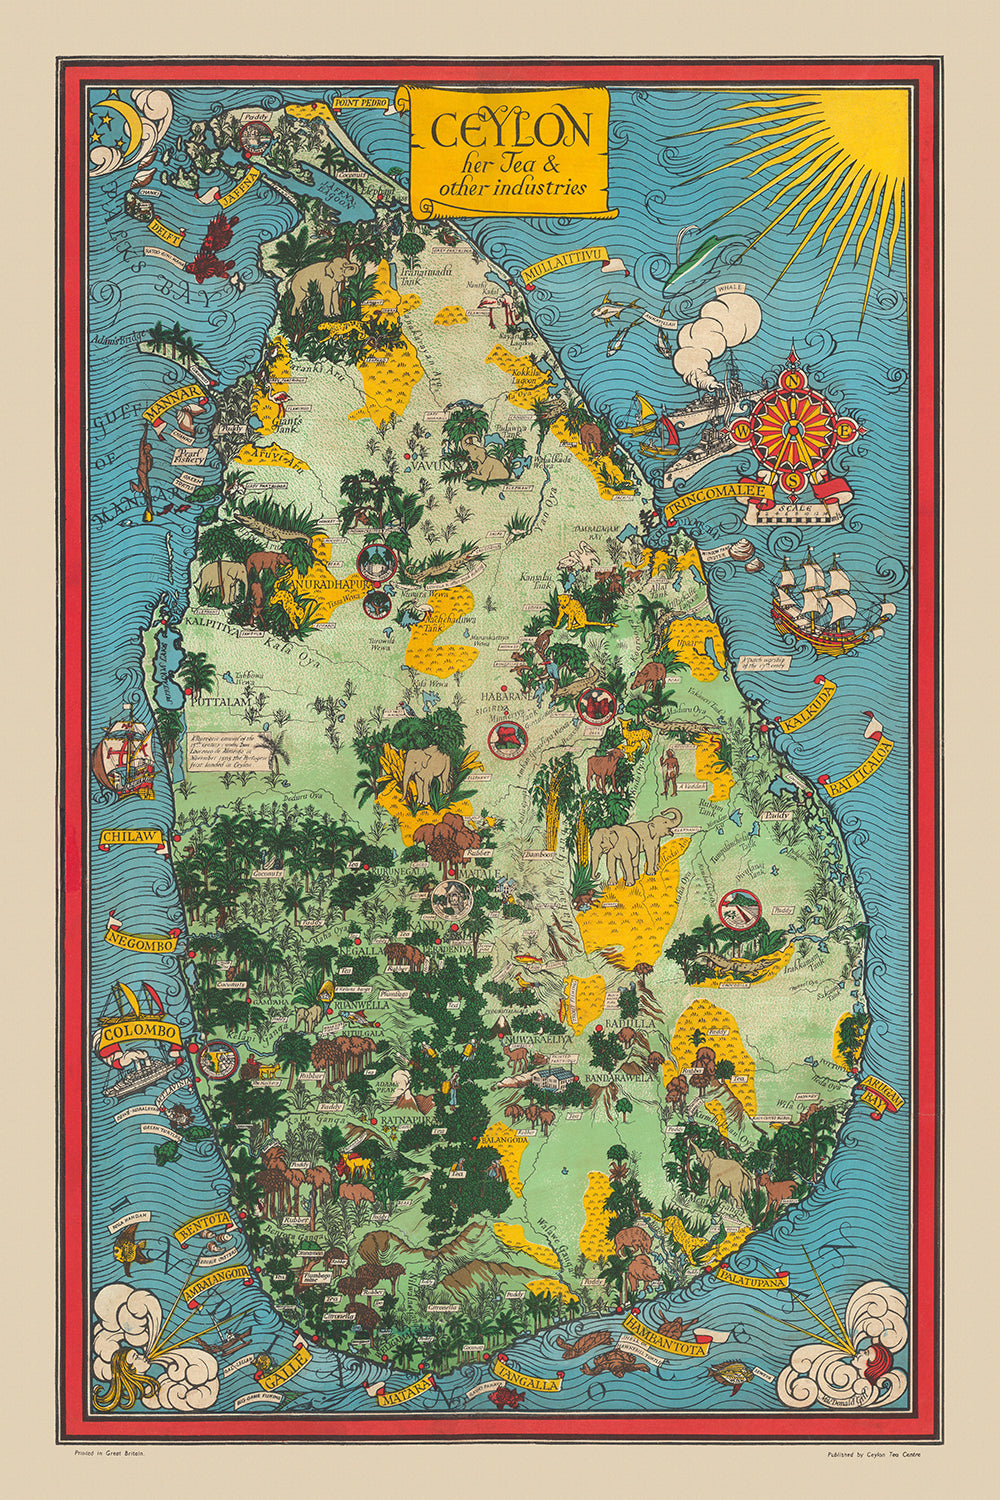 Old Pictorial Map of Ceylon (Sri Lanka) by Gill, 1933: Elephants, Tea, Colombo, Adam's Peak, Jungle Scenes